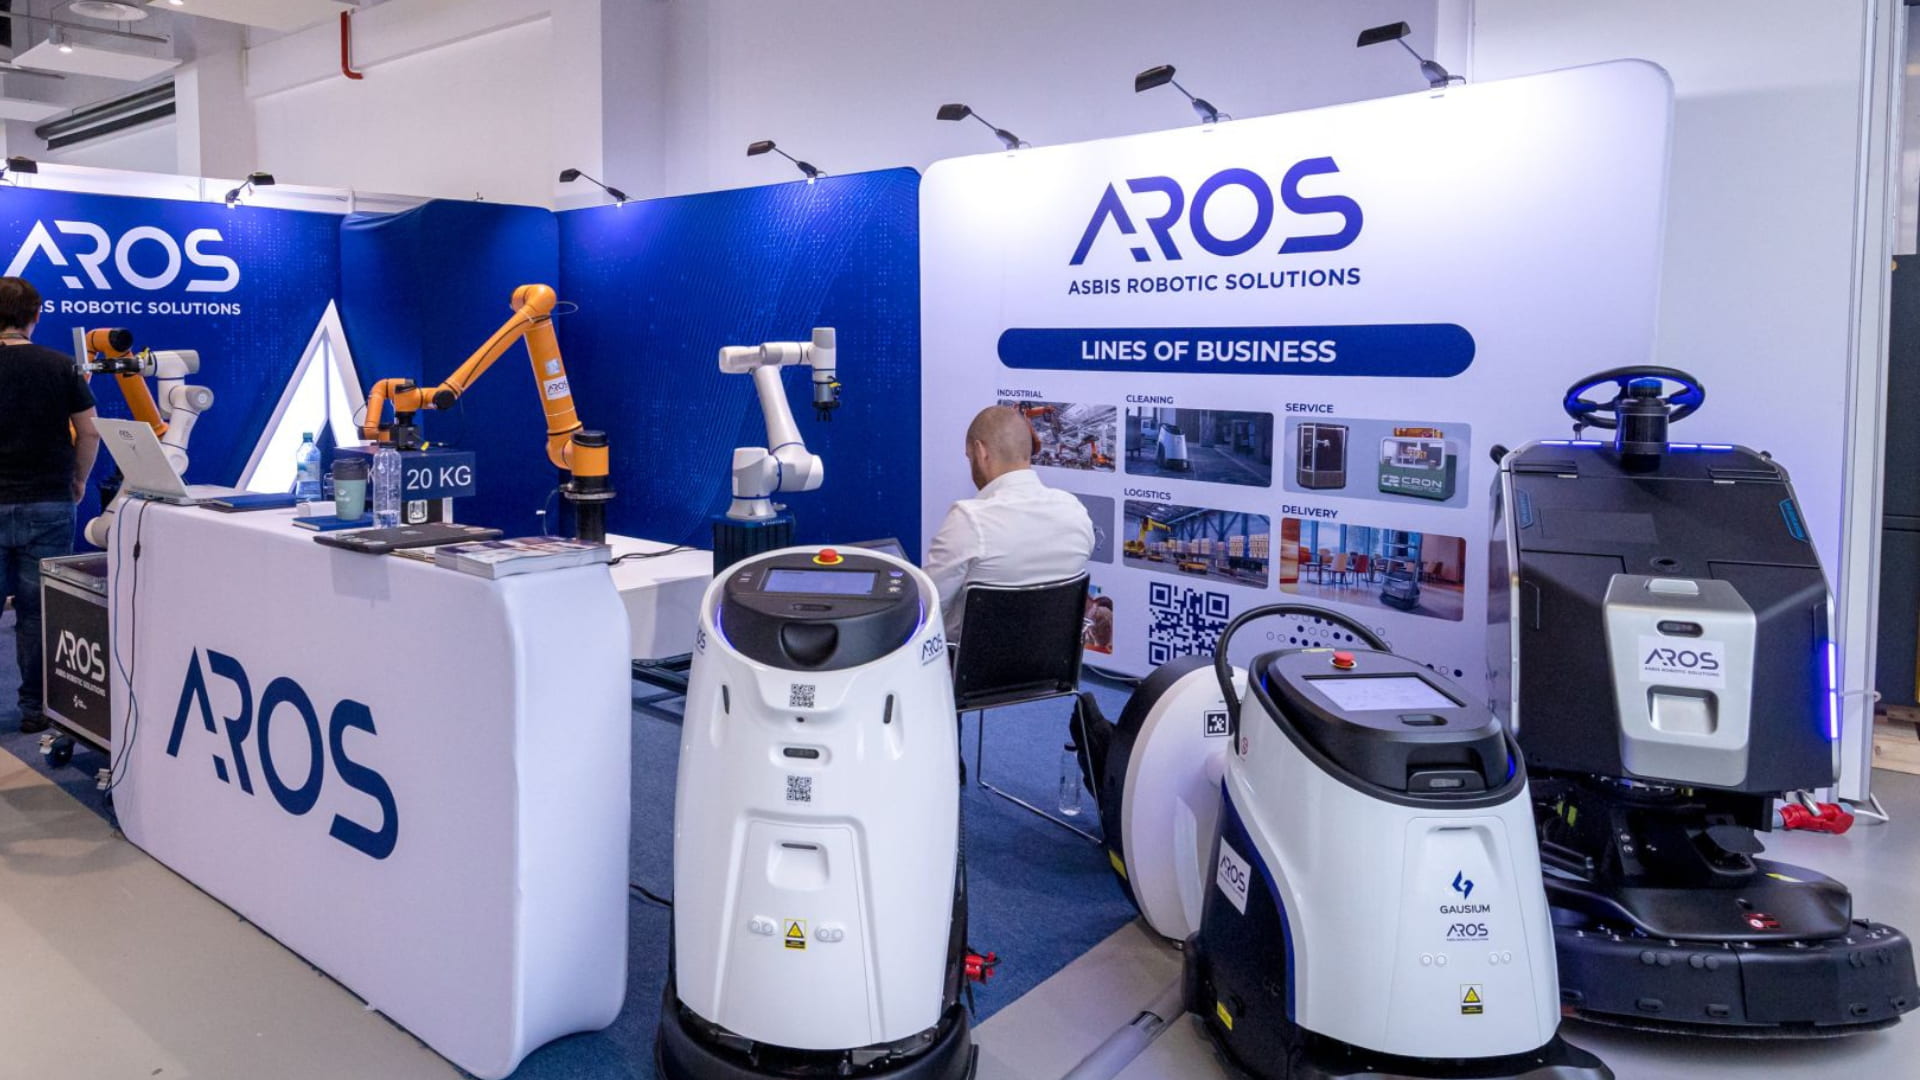 AROS - ASBIS Robotic Solutions (AROS)